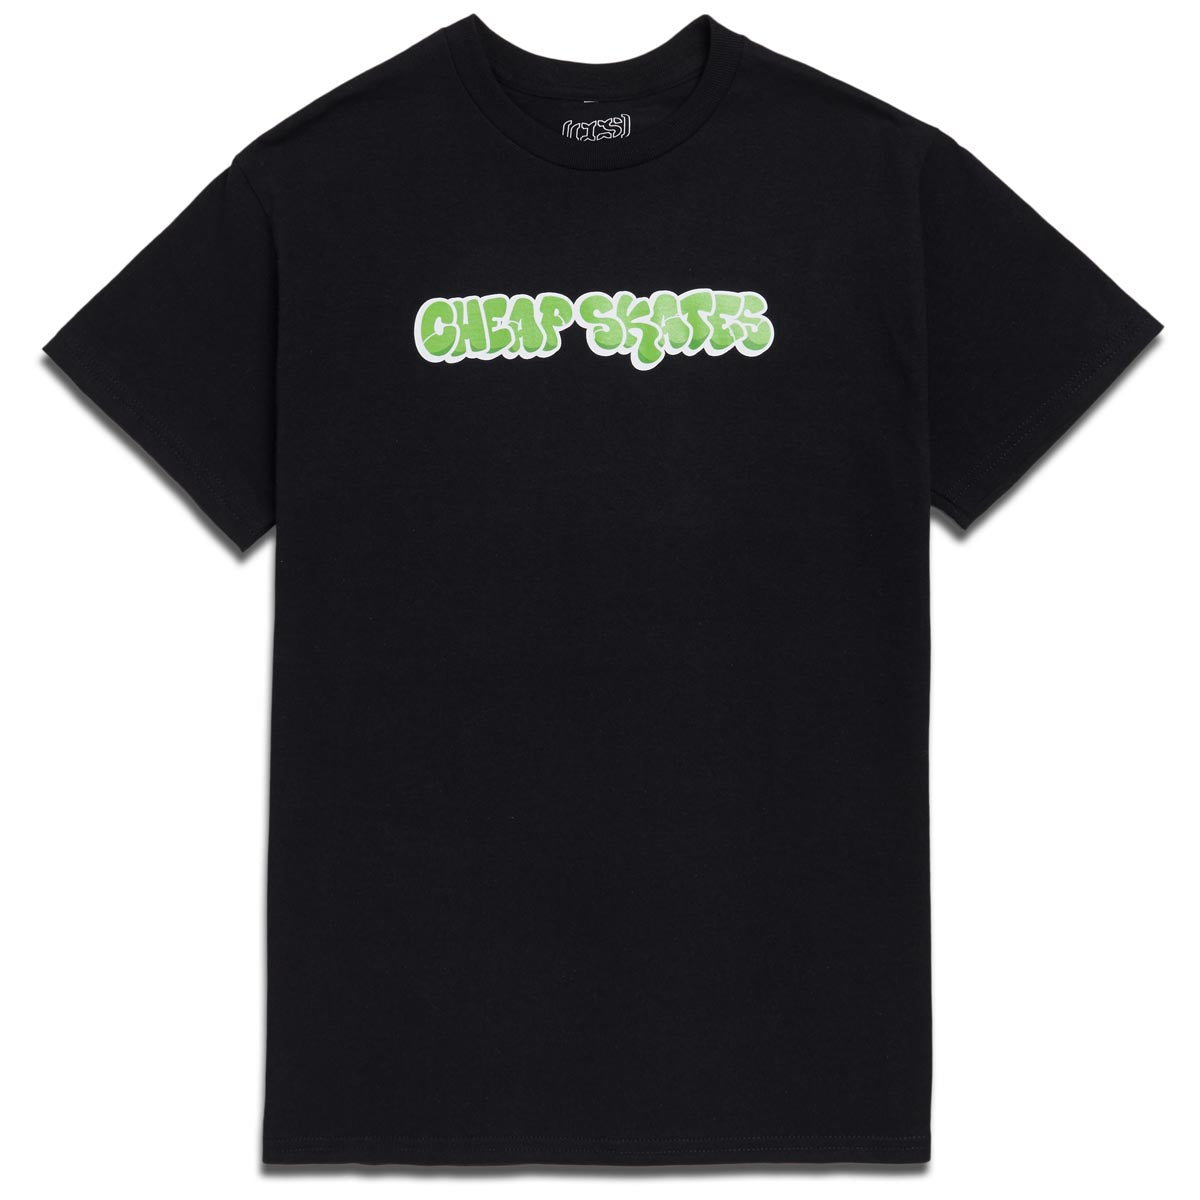 CCS Cheap Skates Tag T-Shirt - Black/Green/White image 1